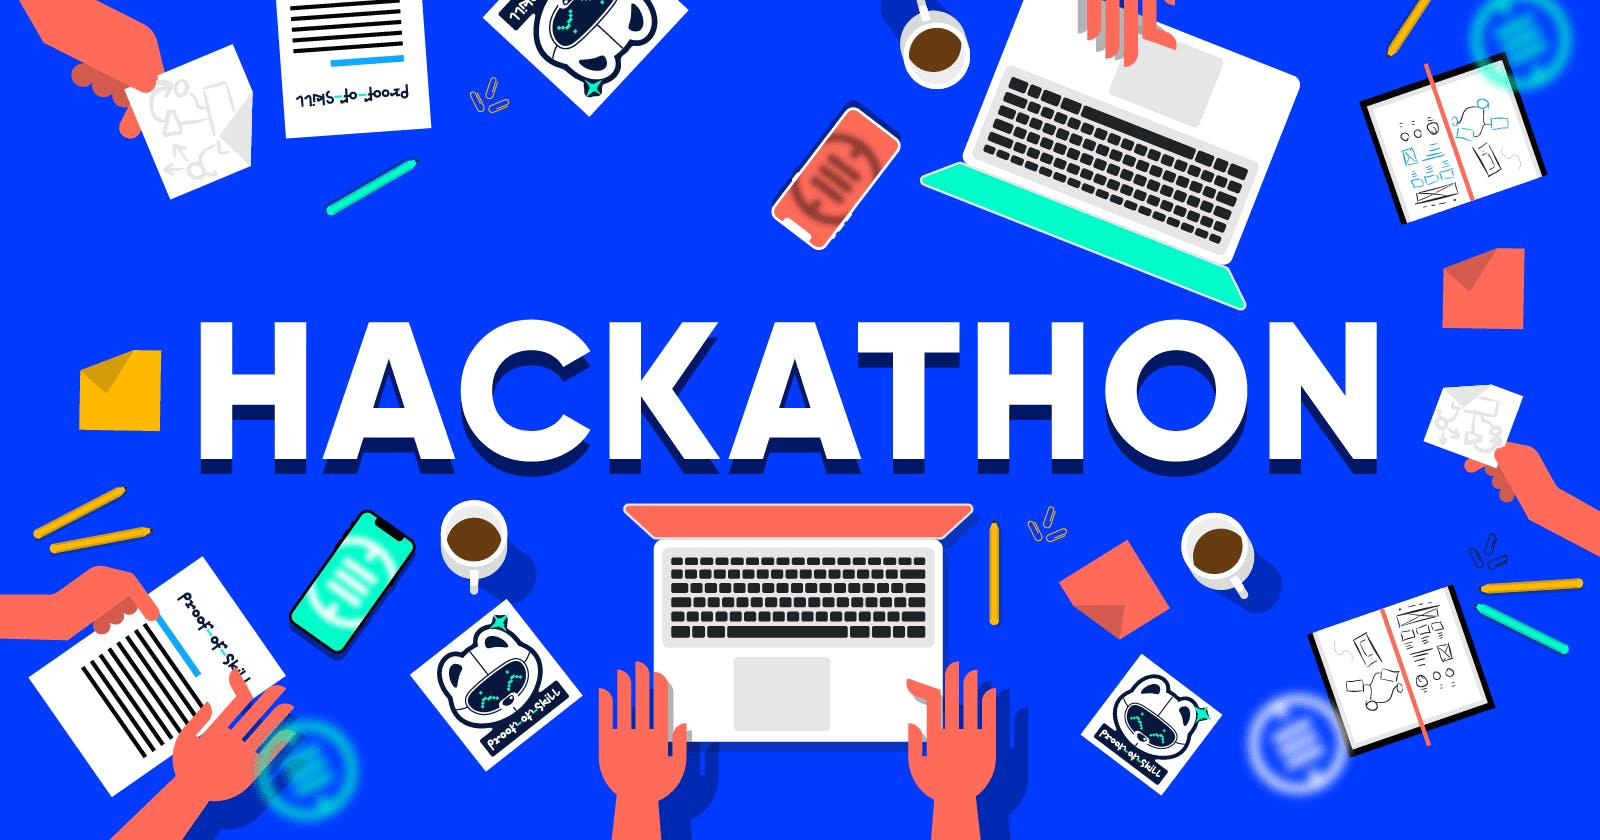 What is Hackathon ?